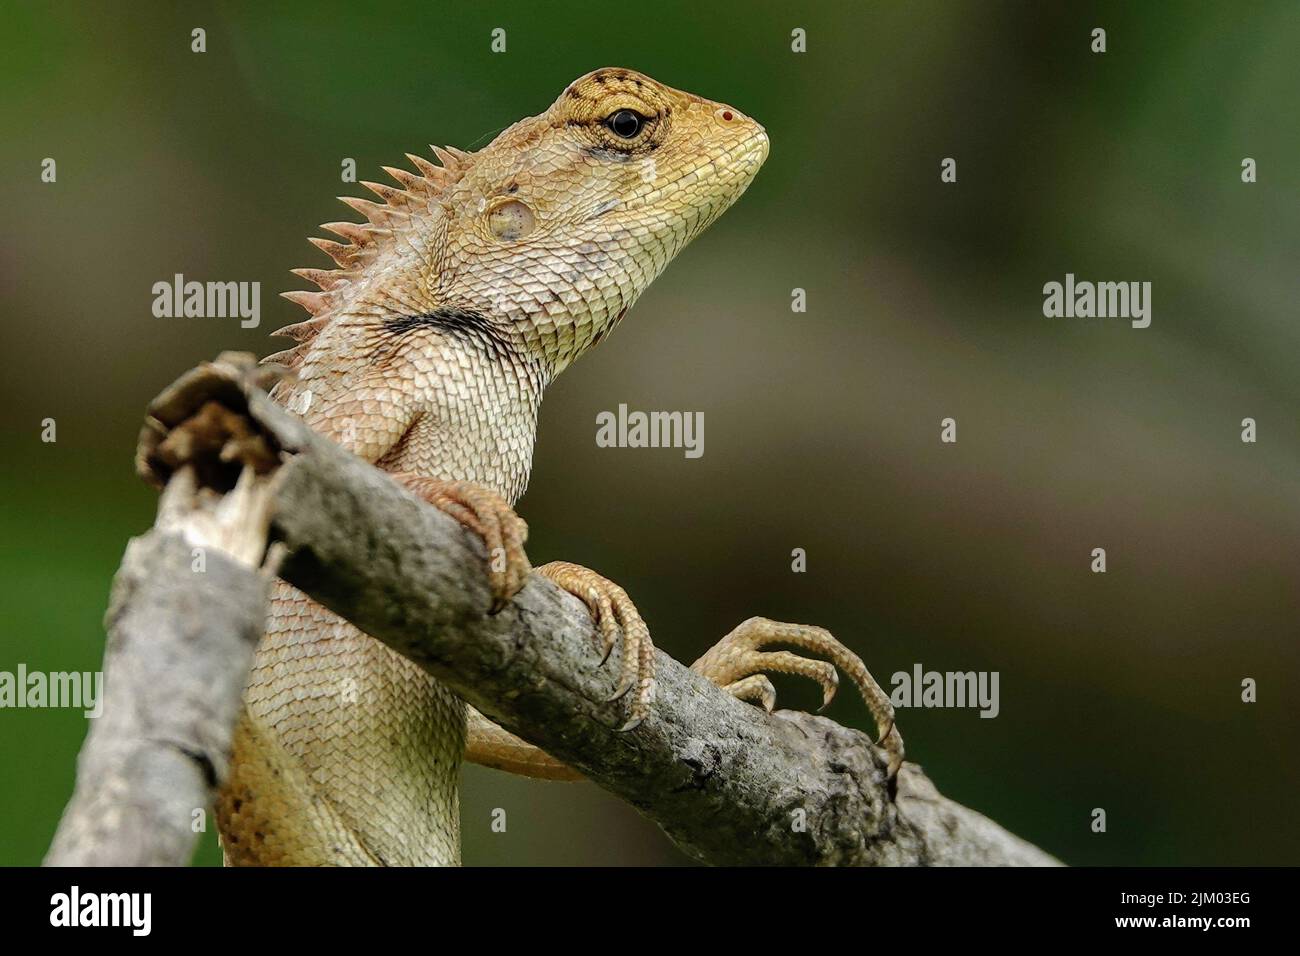 A closeup shot of a beautiful lizard on the blurry background Stock Photo